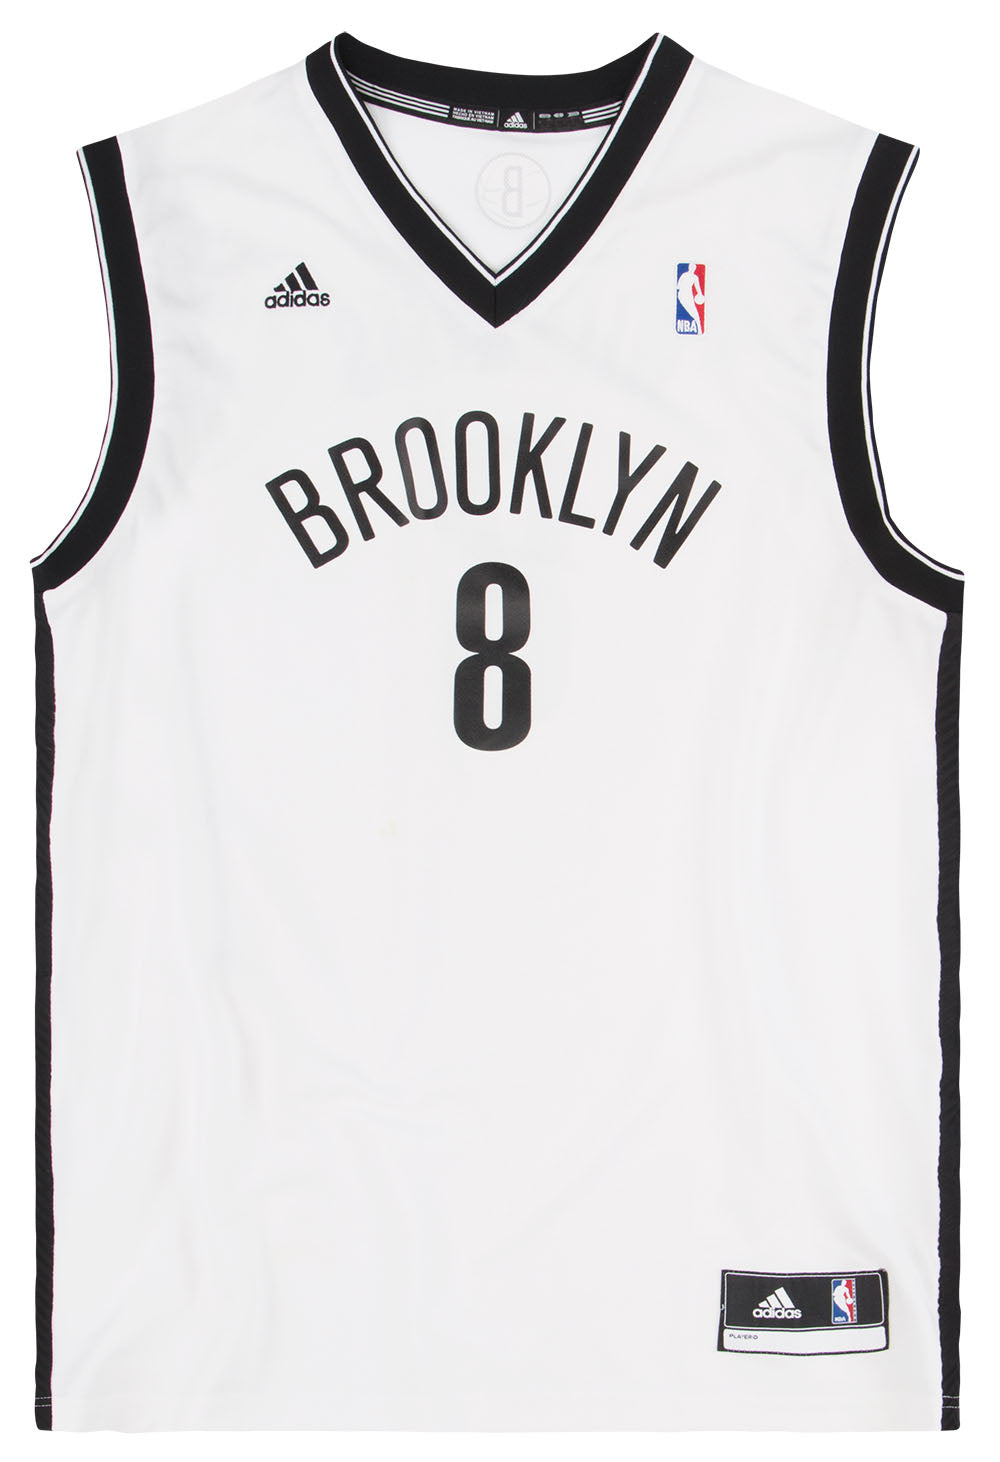 8 Deron Williams Brooklyn Nets Adidas Jersey YOUTH Sleeved Jersey M 10/12